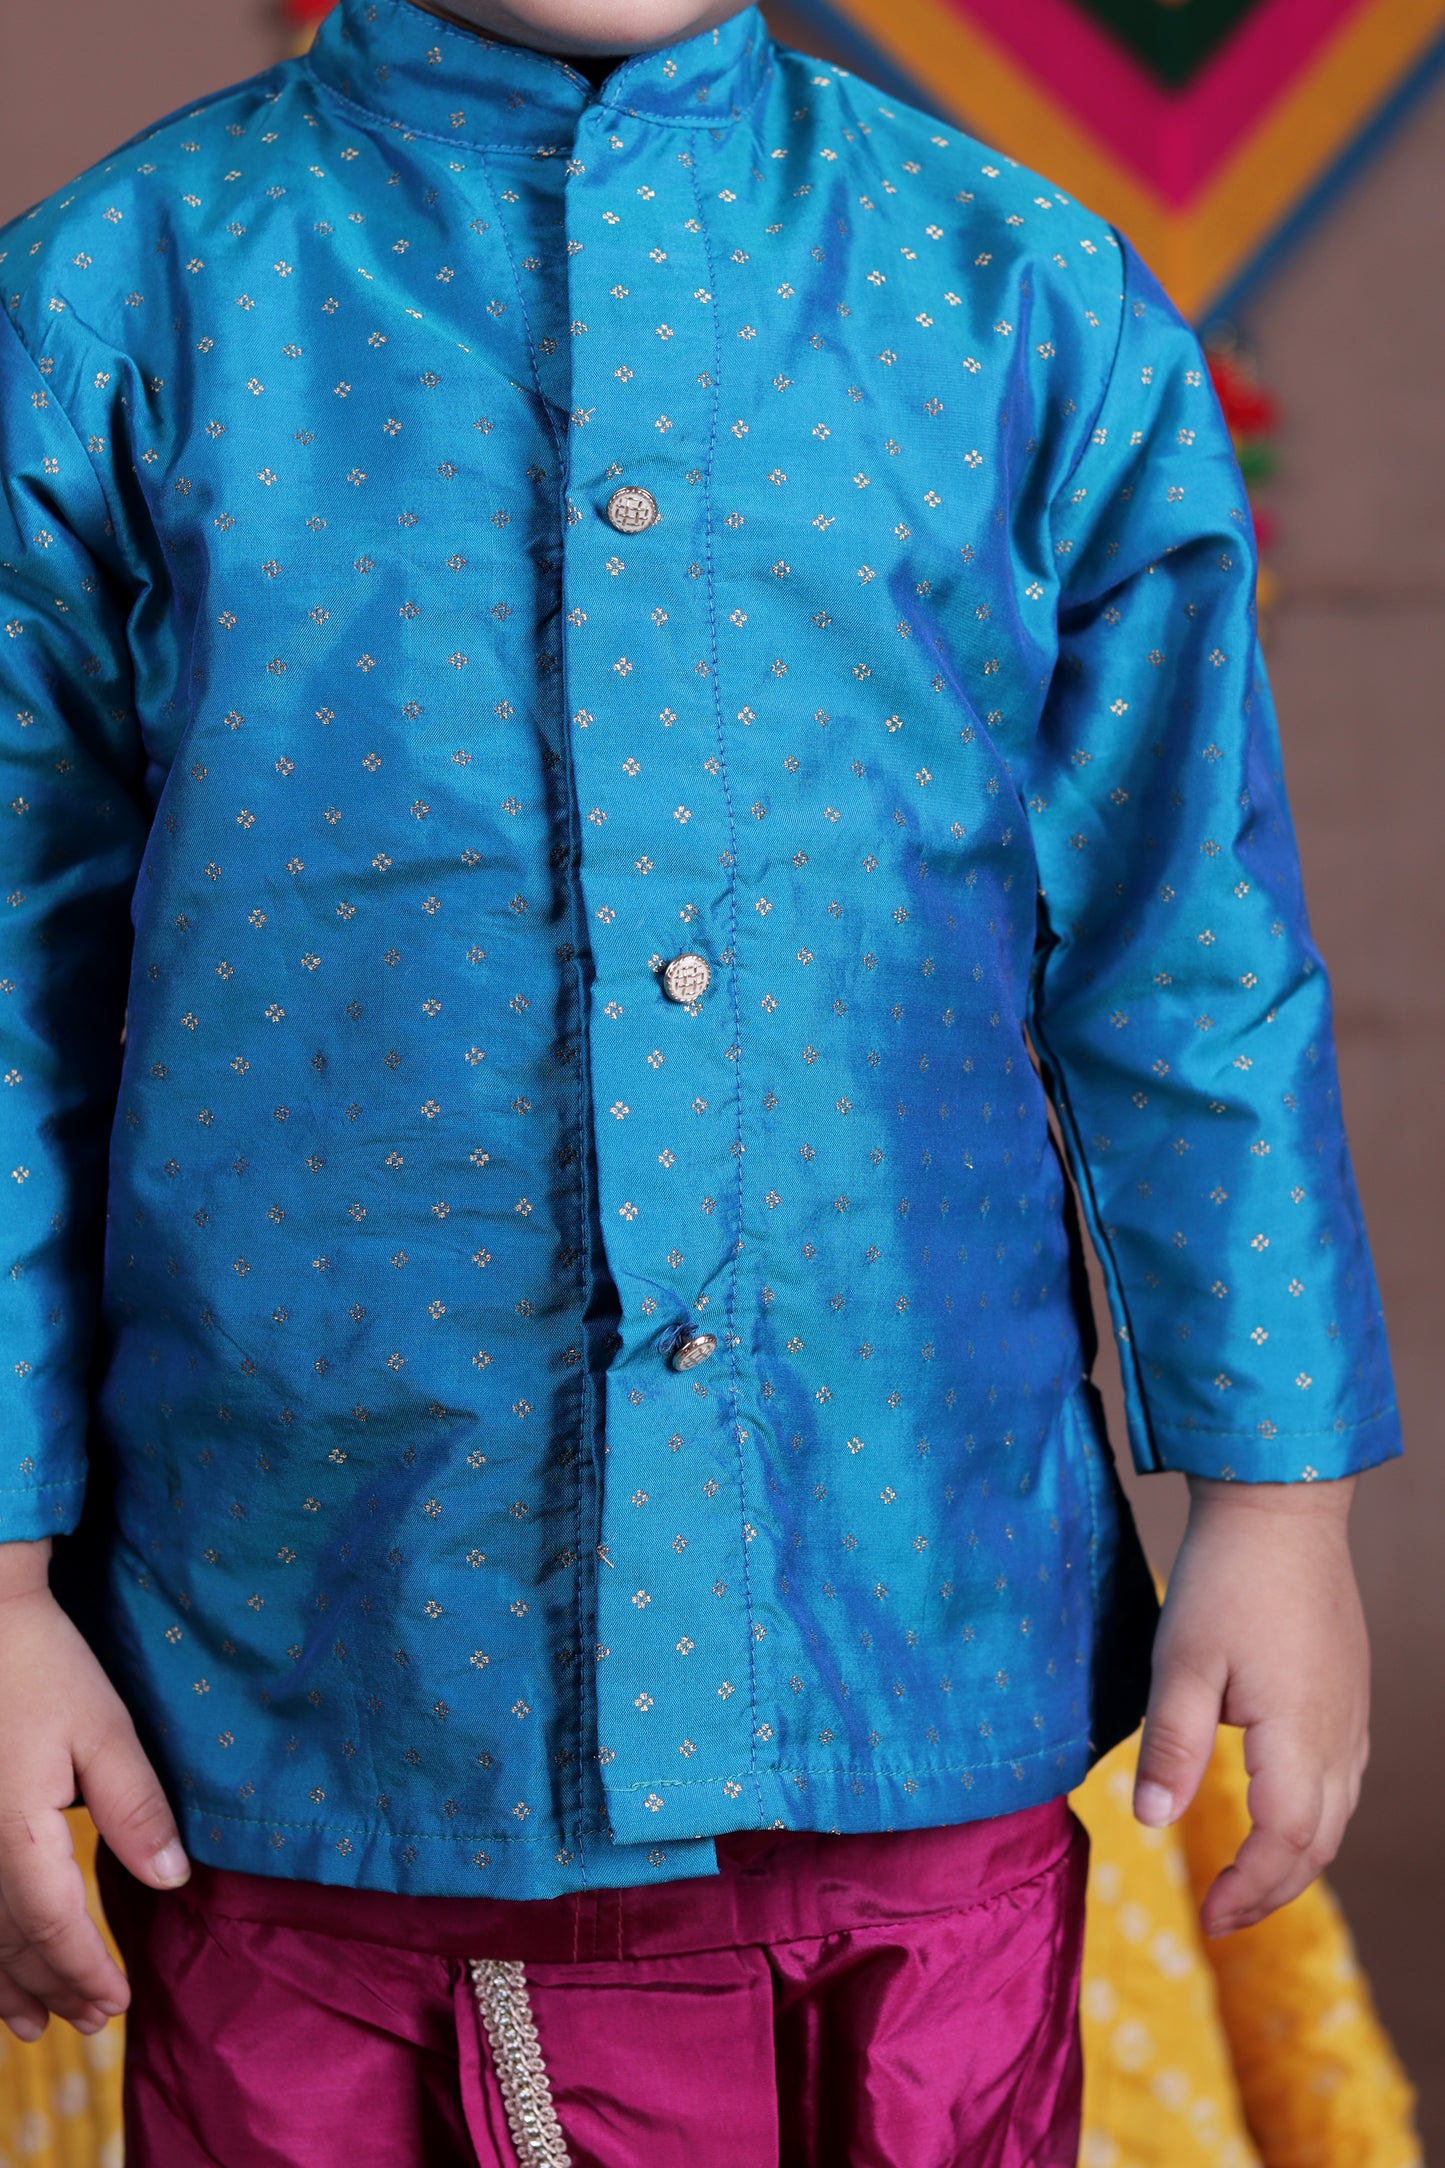 Aqua Blue and Pink Silk kurta dhoti ethnic dress for baby boy